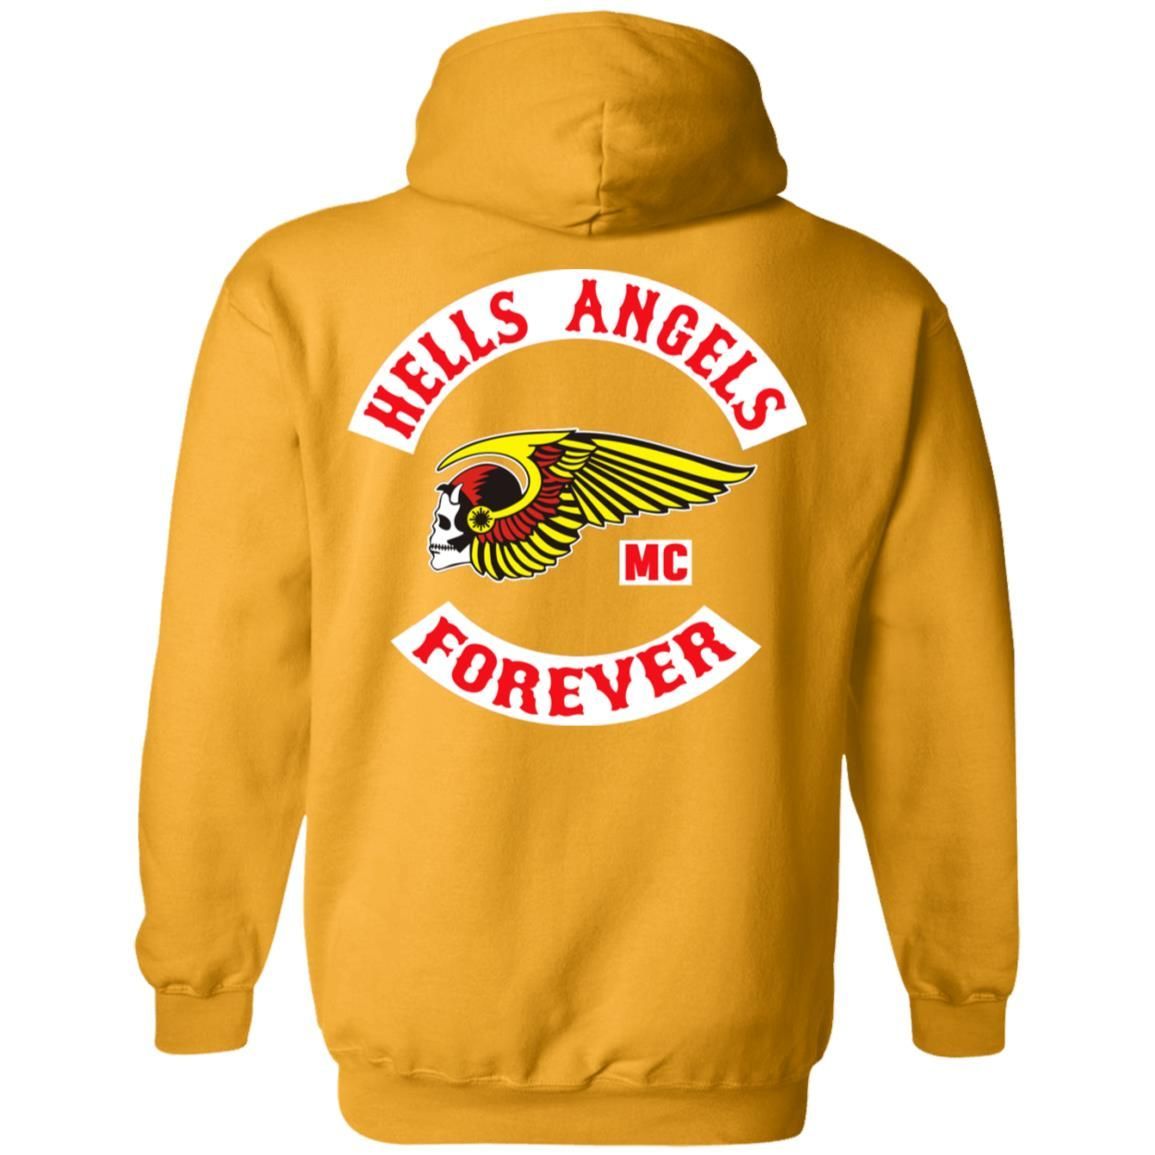 Hells Angels MC Forever Hoodie T-Shirt